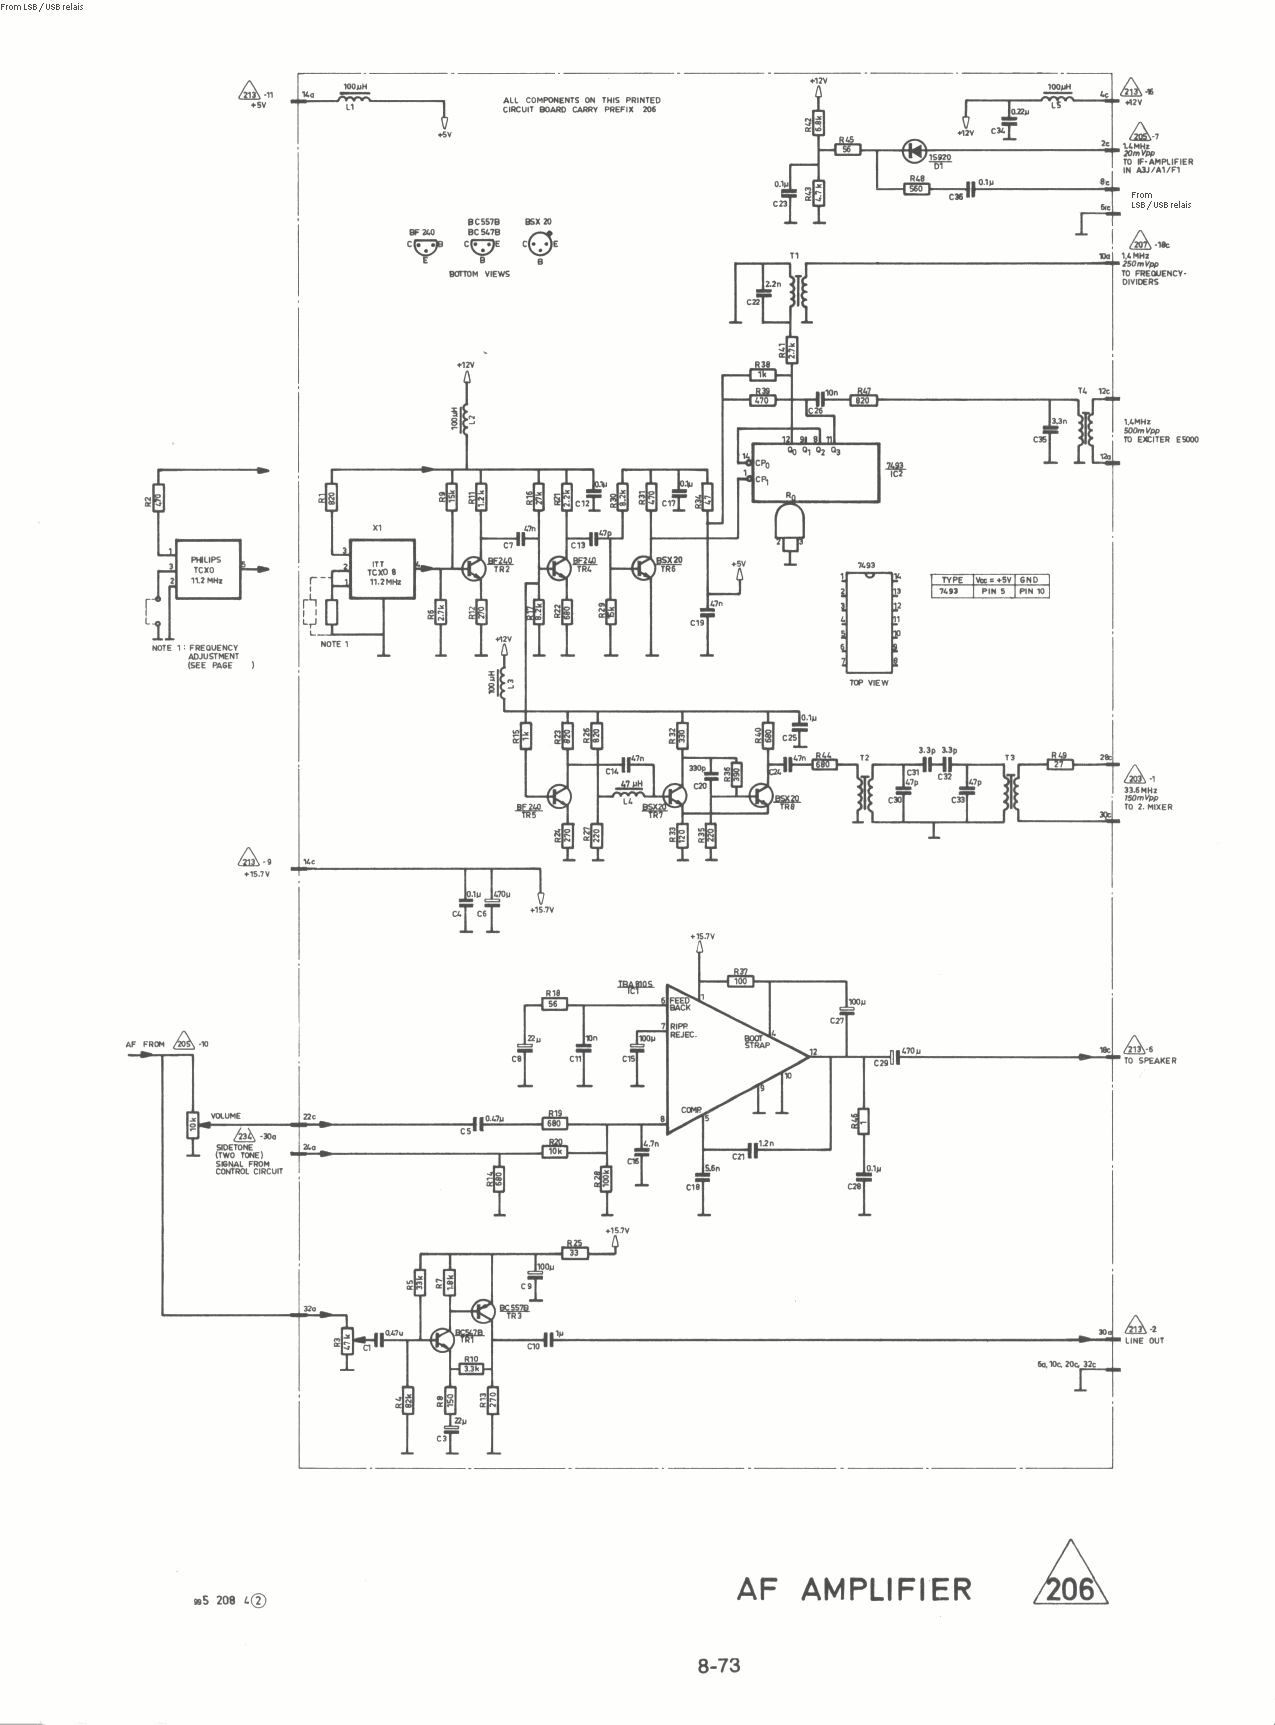 Skanti HF AF-Amplifier diagram 206